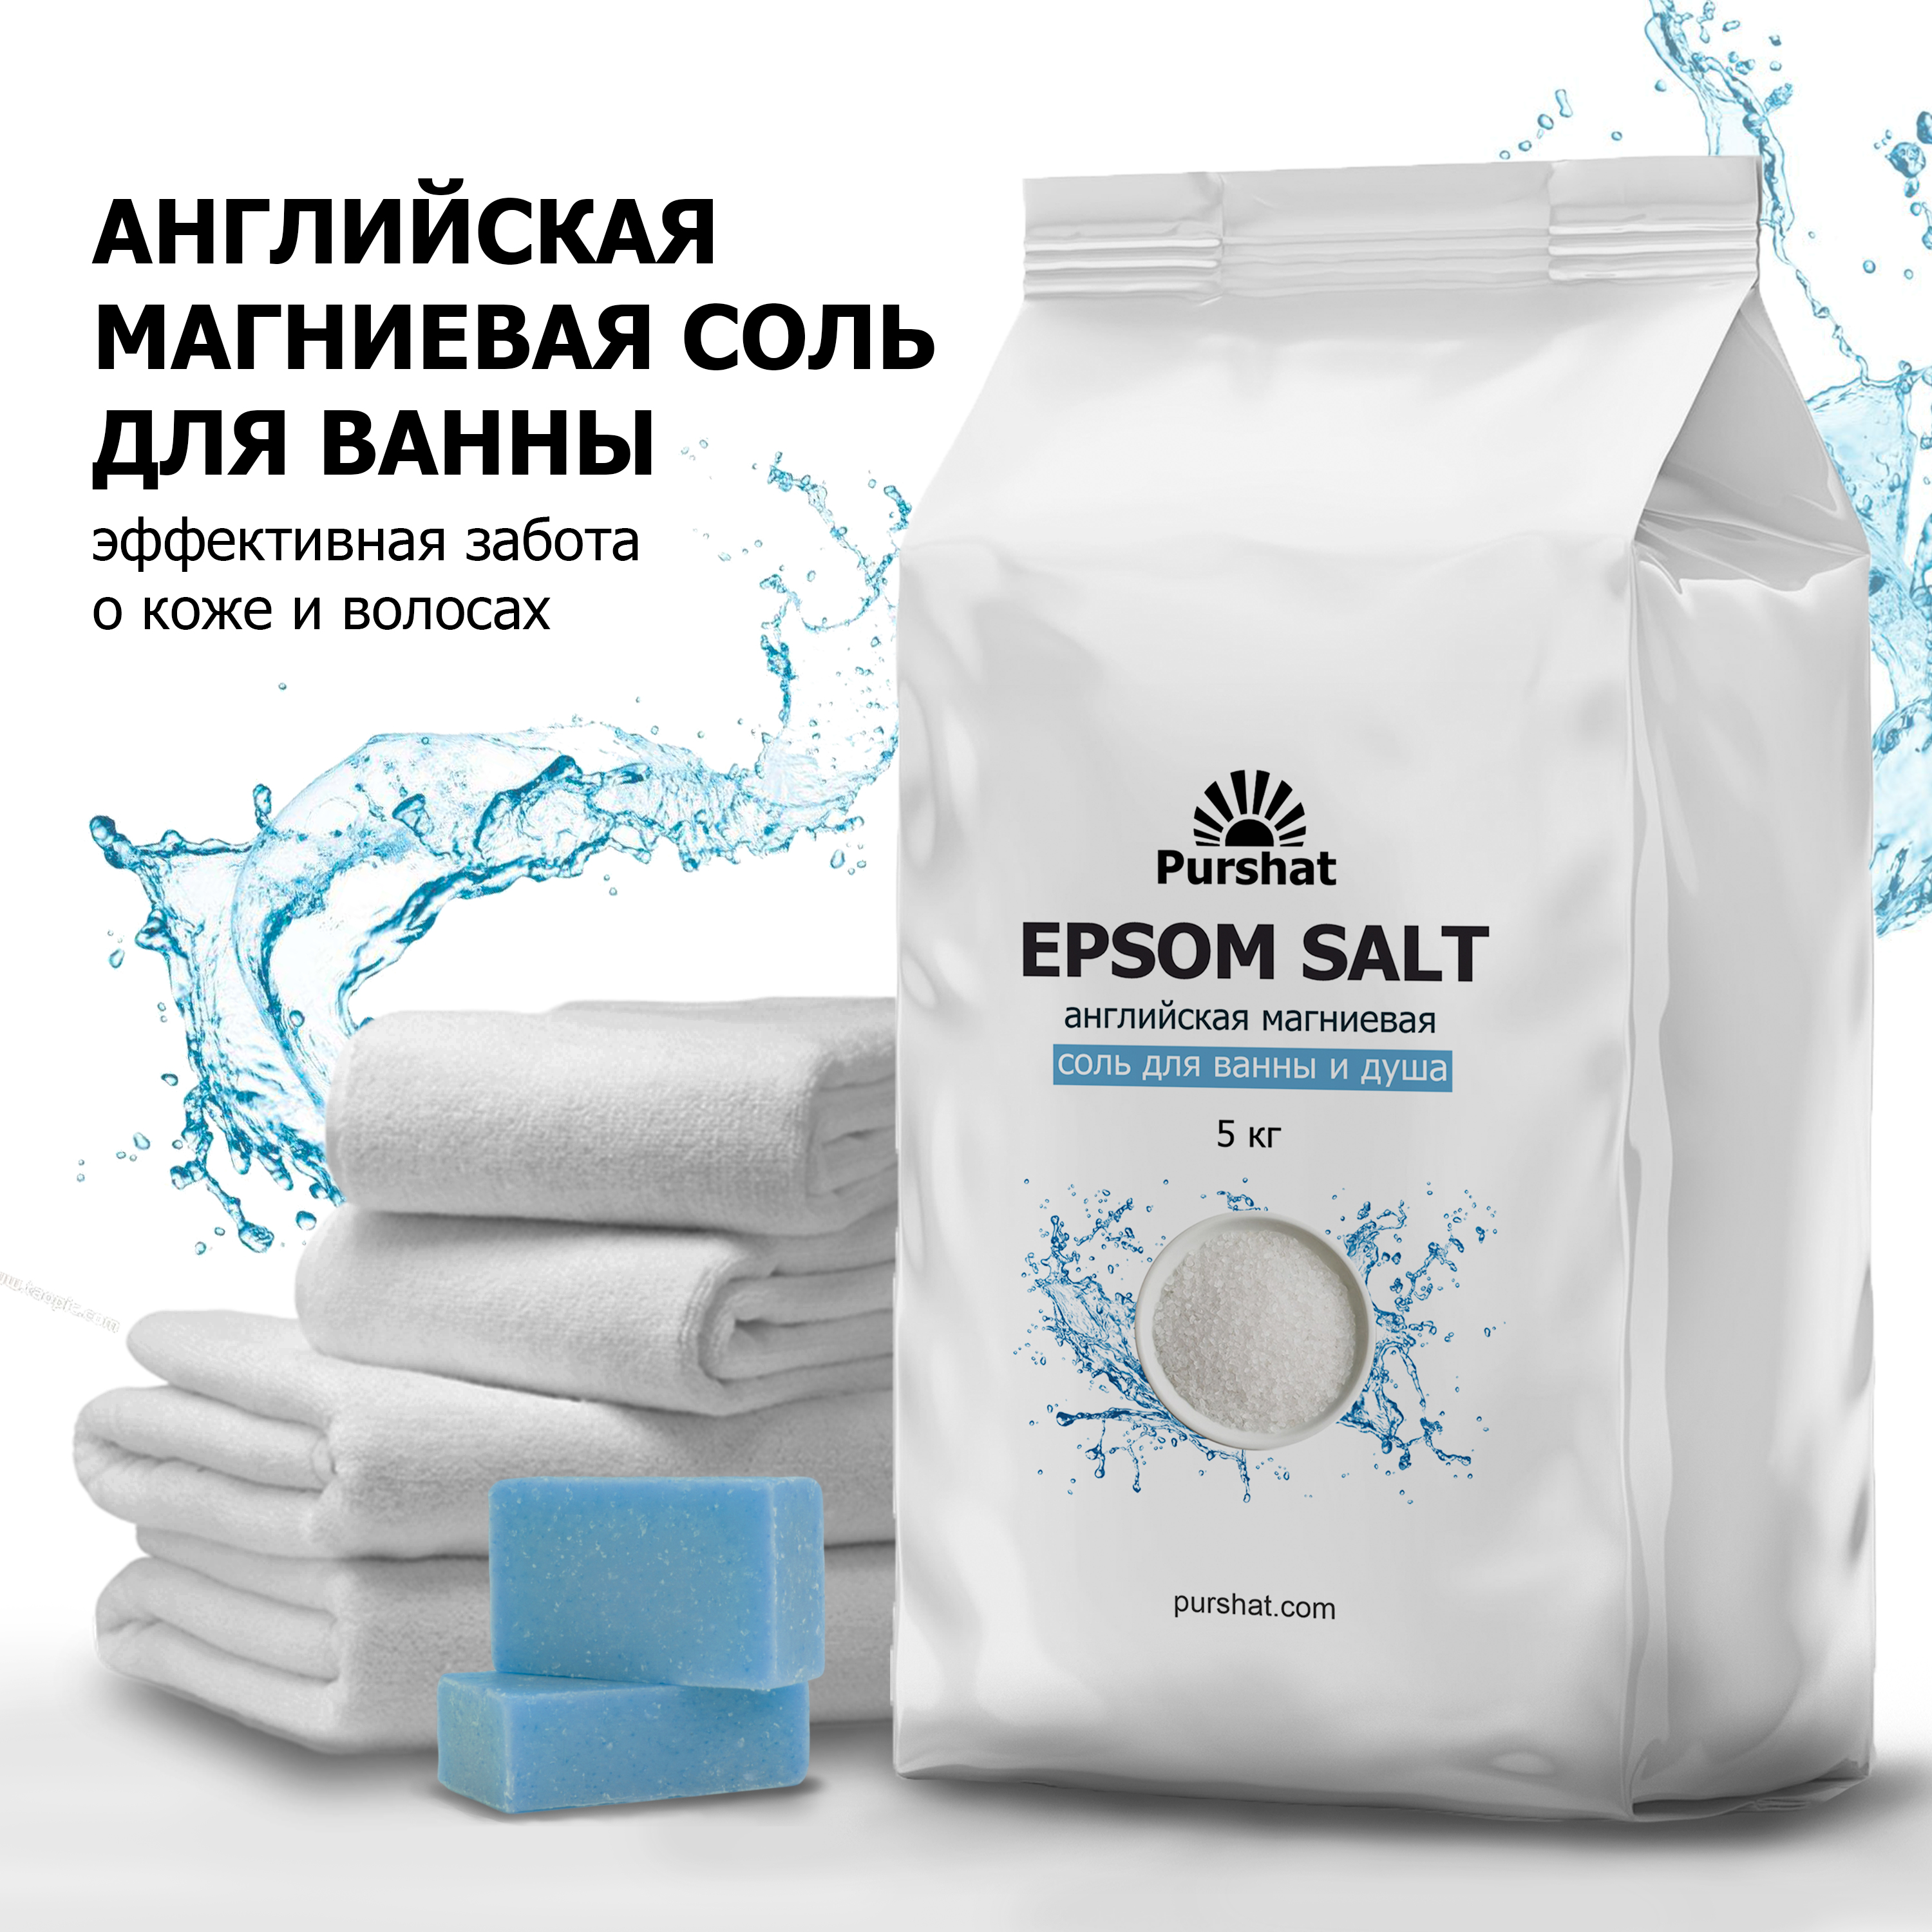 Английская магниевая соль для ванны Purshat Epsom 5 кг английская магниевая соль для ванны purshat epsom 5 кг